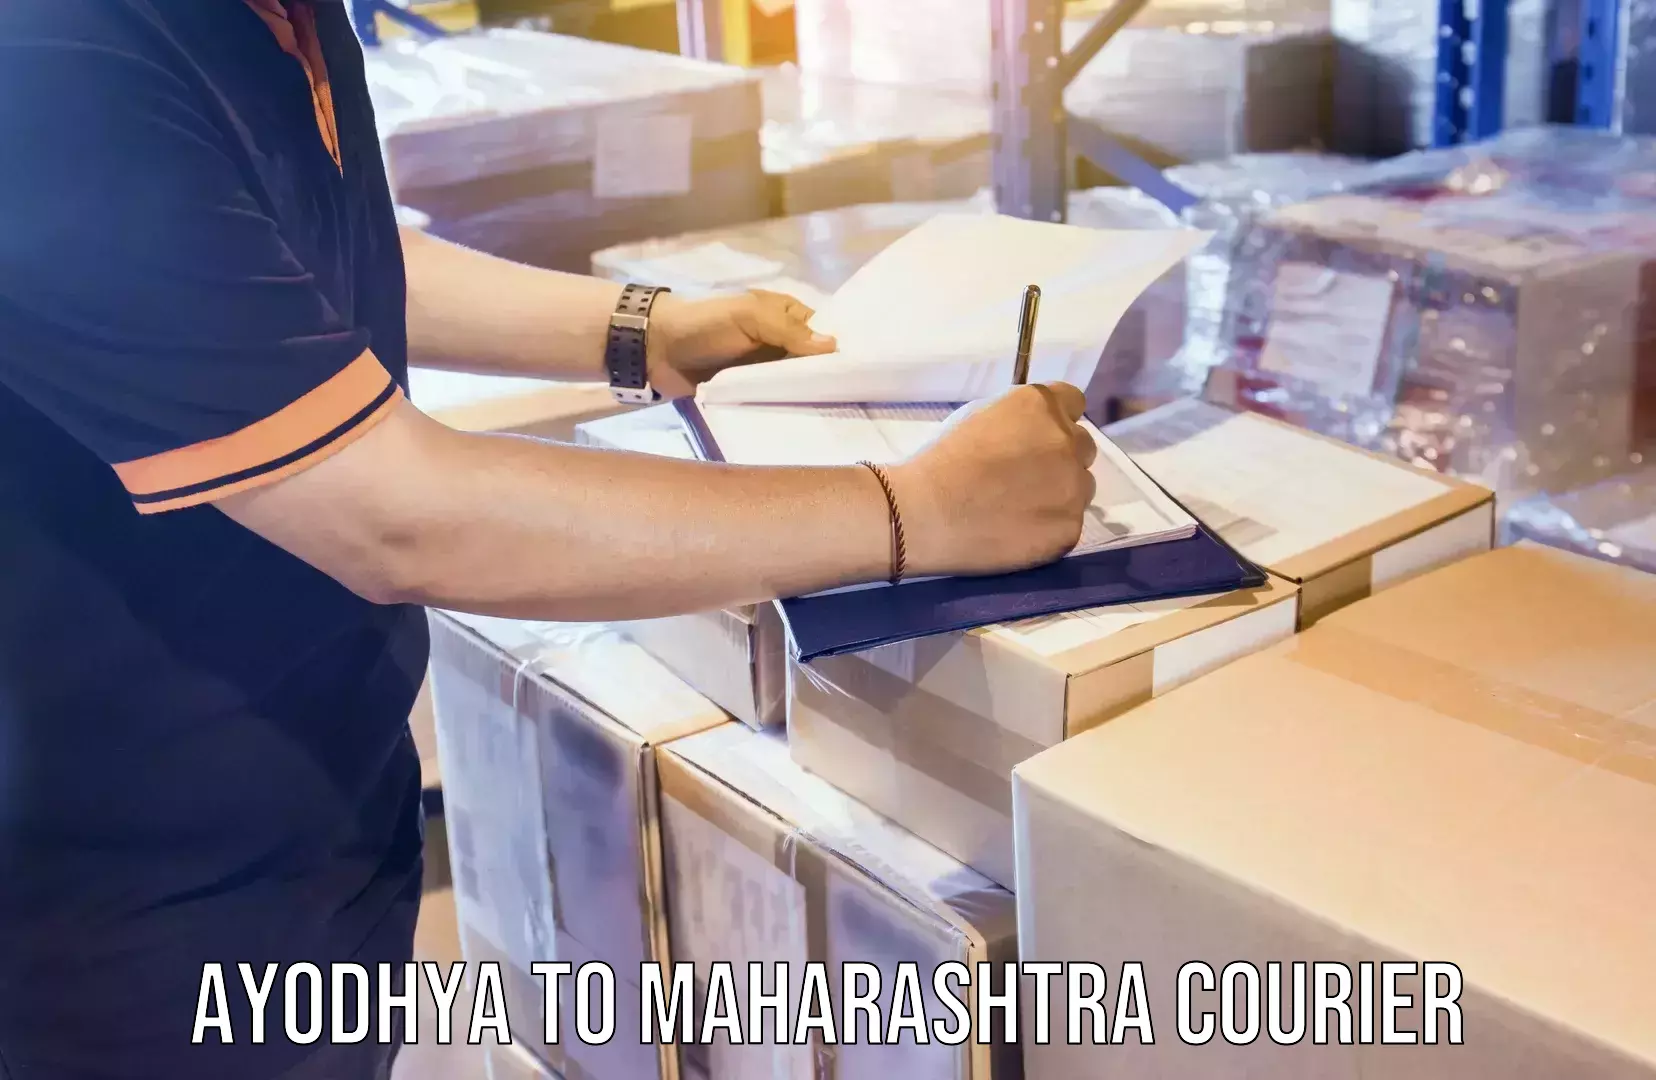 Courier service booking Ayodhya to Maharashtra